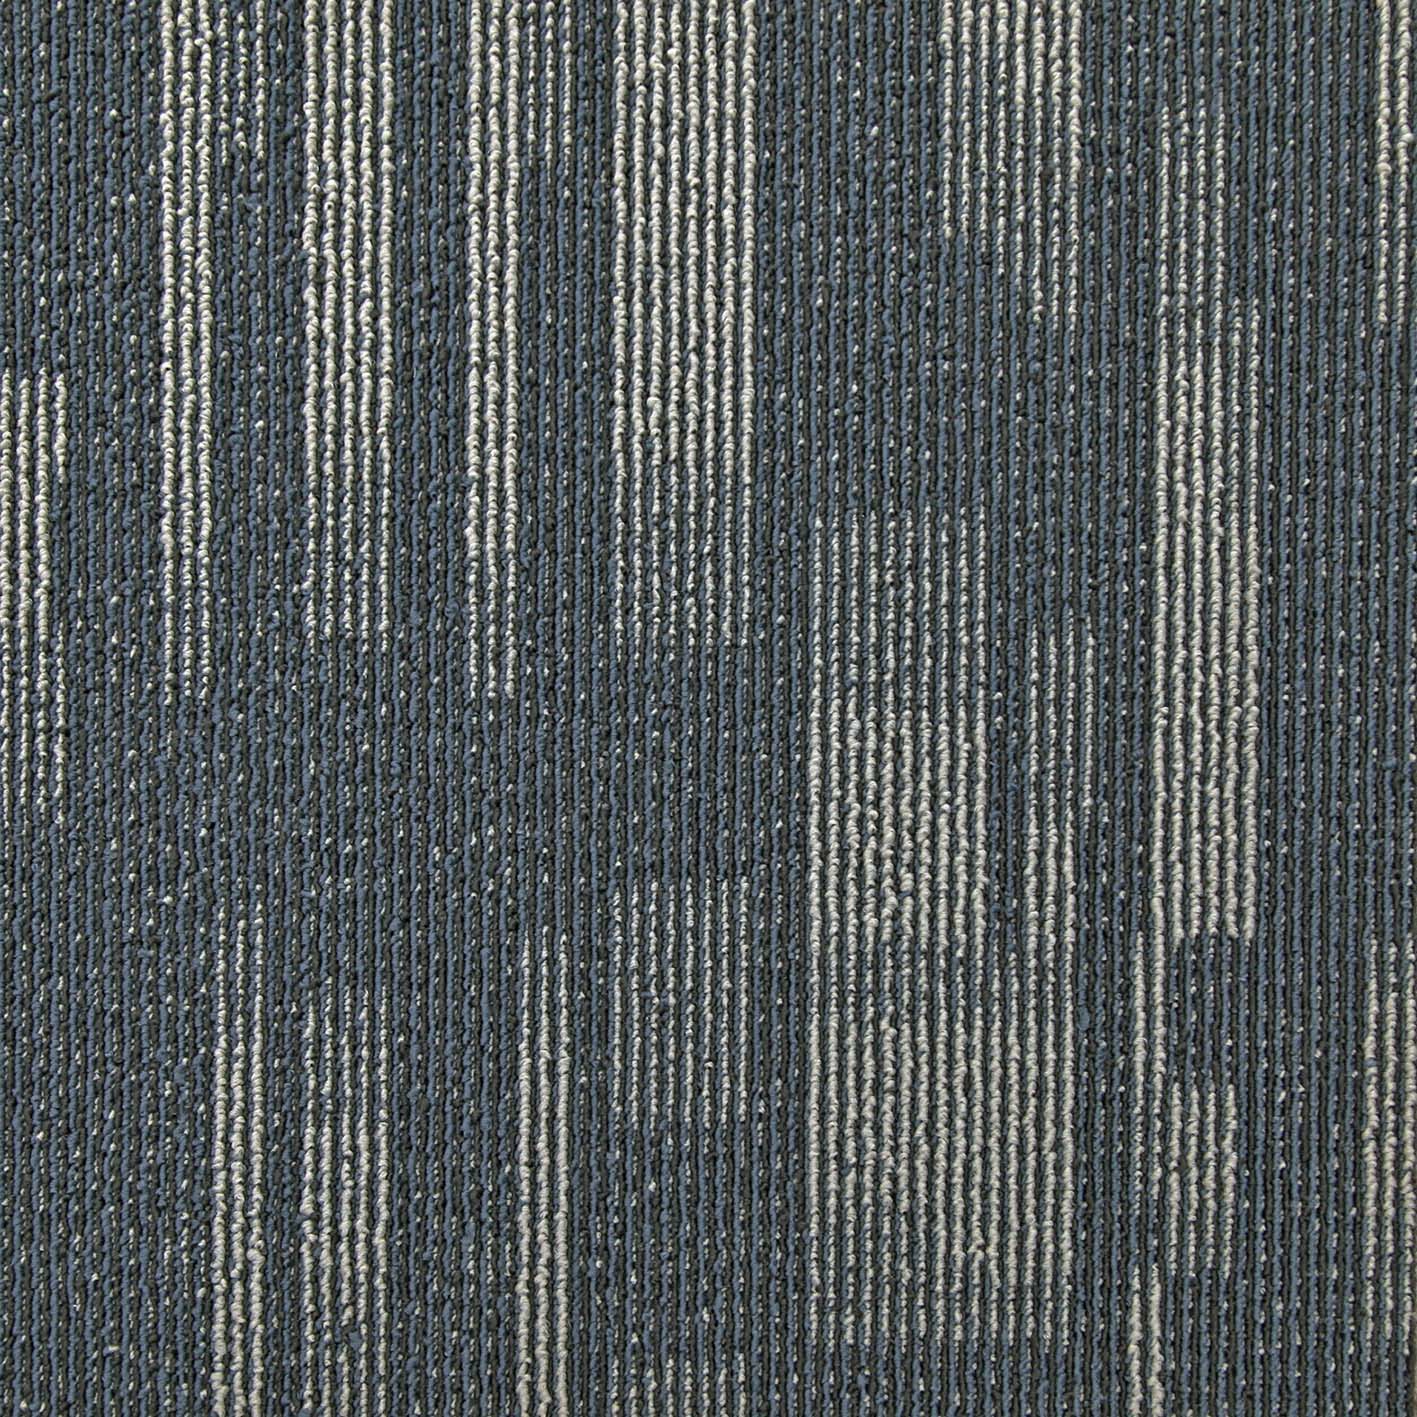 TACK168 Ebay Amazon PP 50*50cm Carpet Rug Tiles Factory